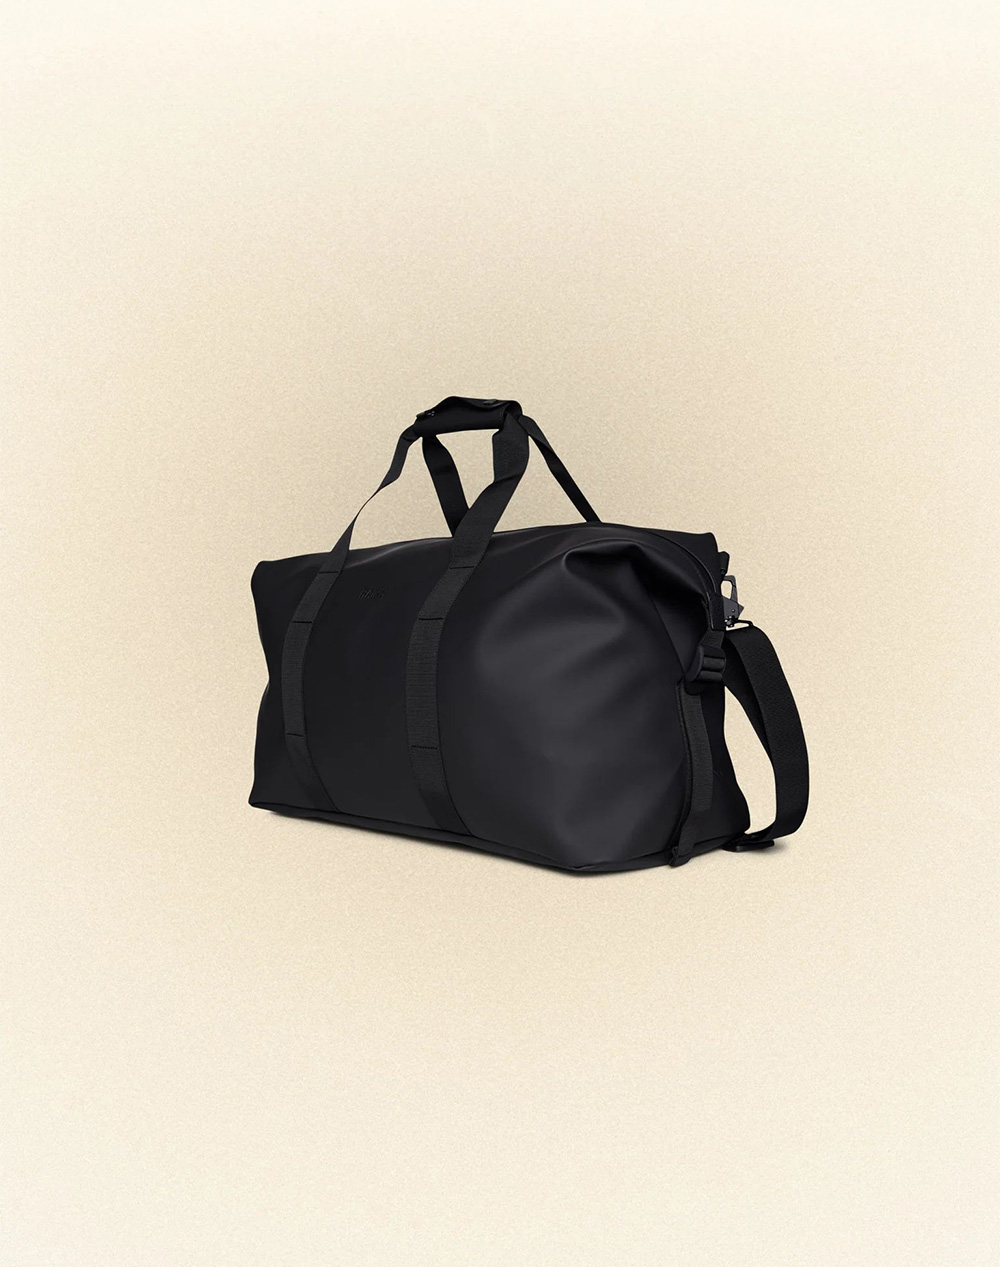 RAINS Hilo Weekend Bag W3 (Dimensions: 27 x 52 x 26 cm)